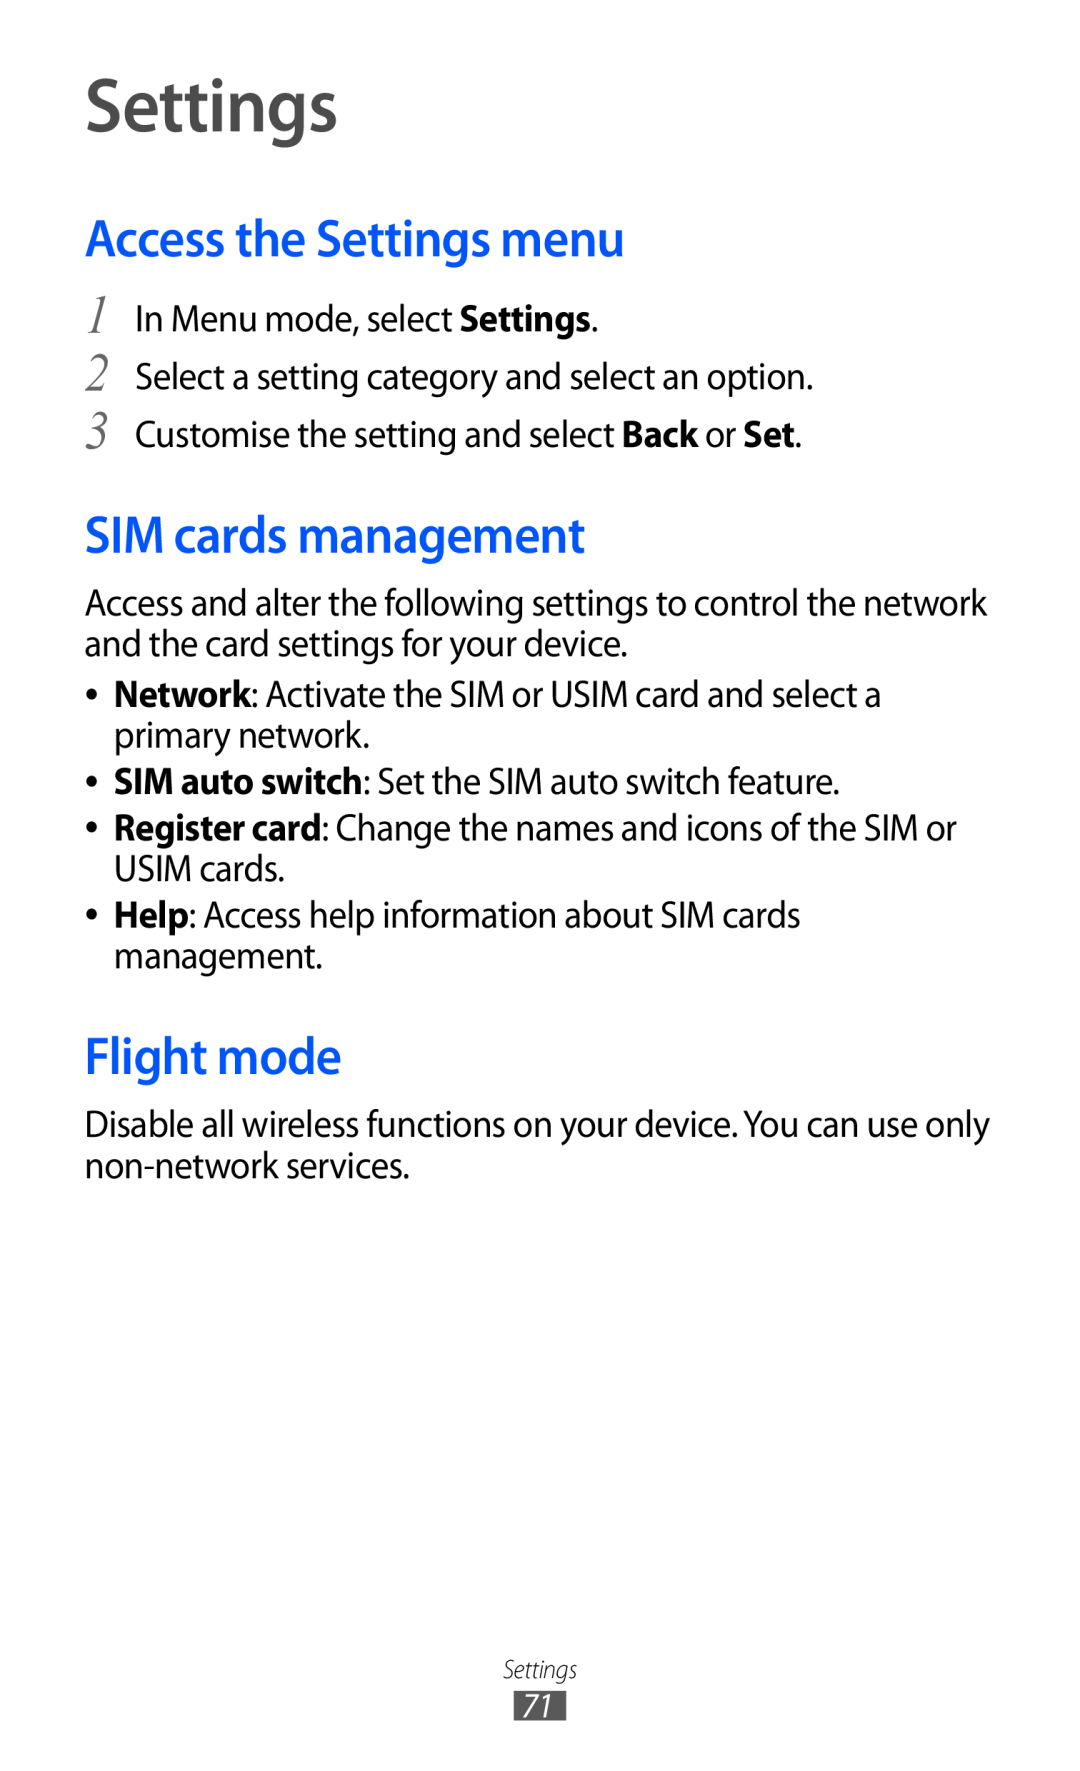 Samsung GT-C6712LKASER, GT-C6712LKACIT, GT-C6712RWACIT manual Access the Settings menu, SIM cards management, Flight mode 